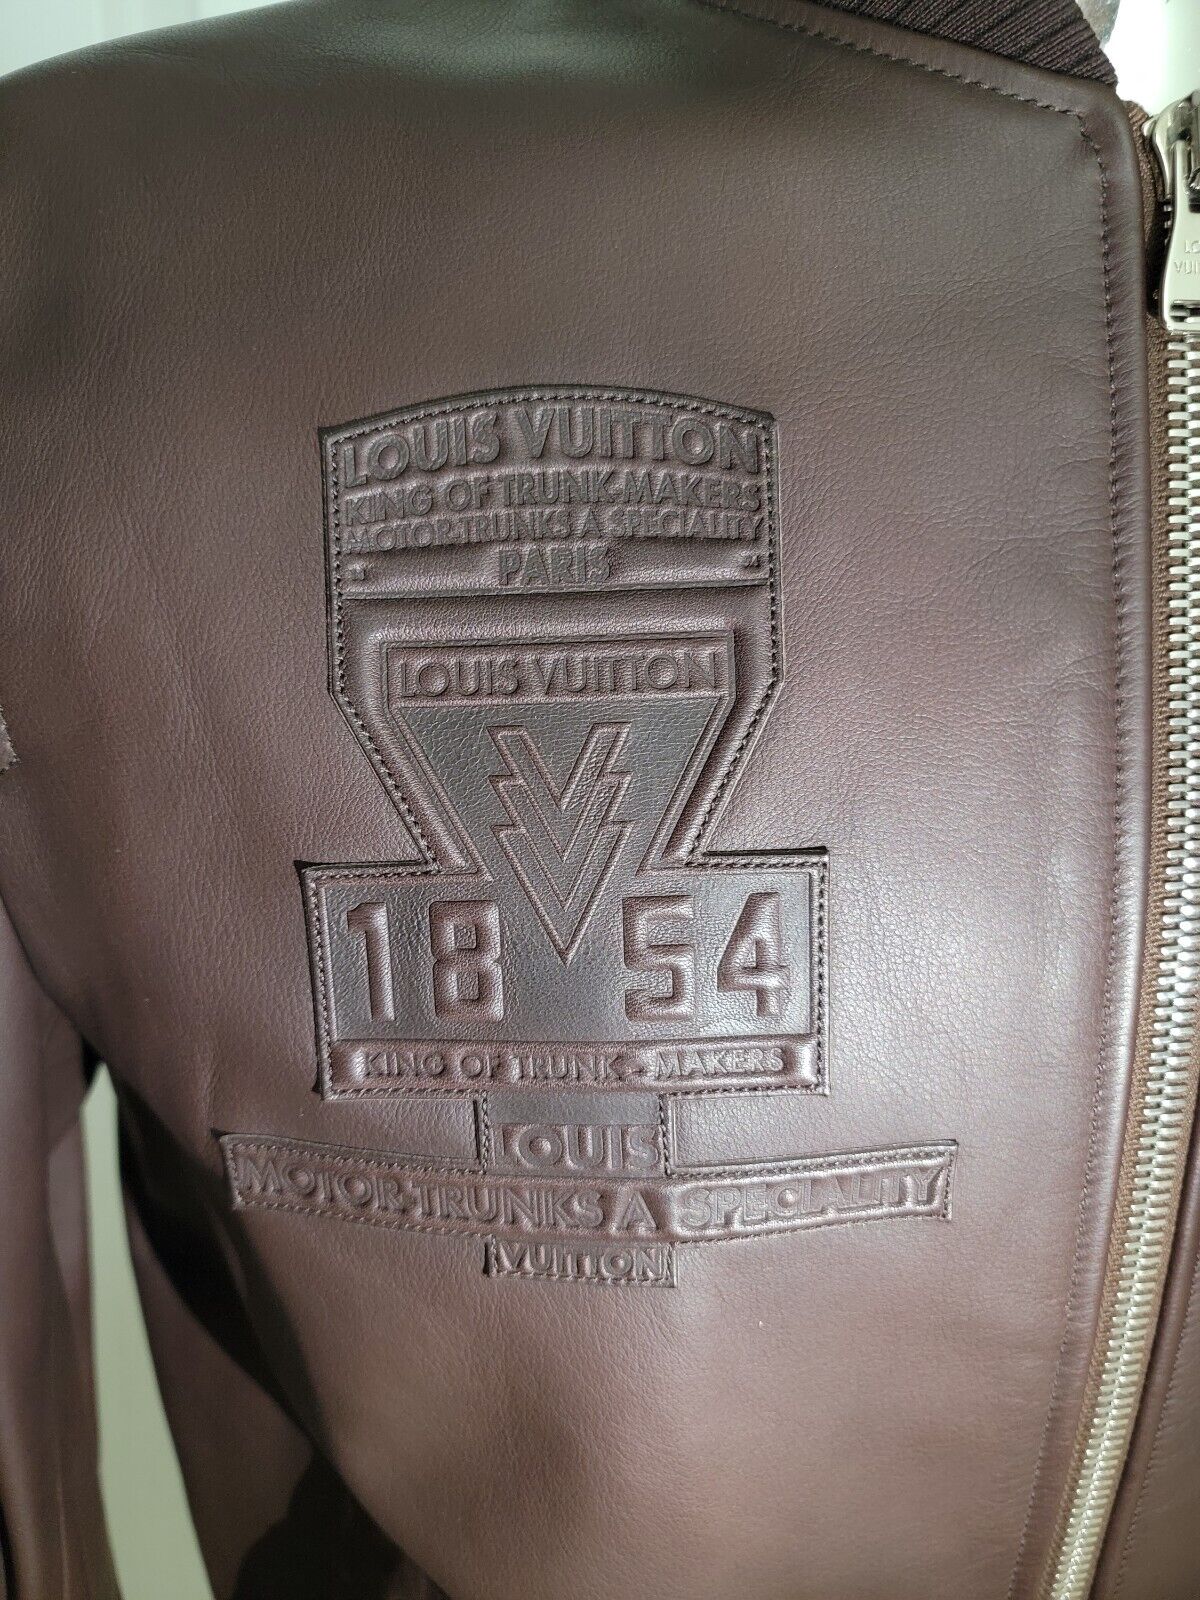 Louis Vuitton Brown Calfskin King Of Trunk-Makers Patch Blouson Jacket